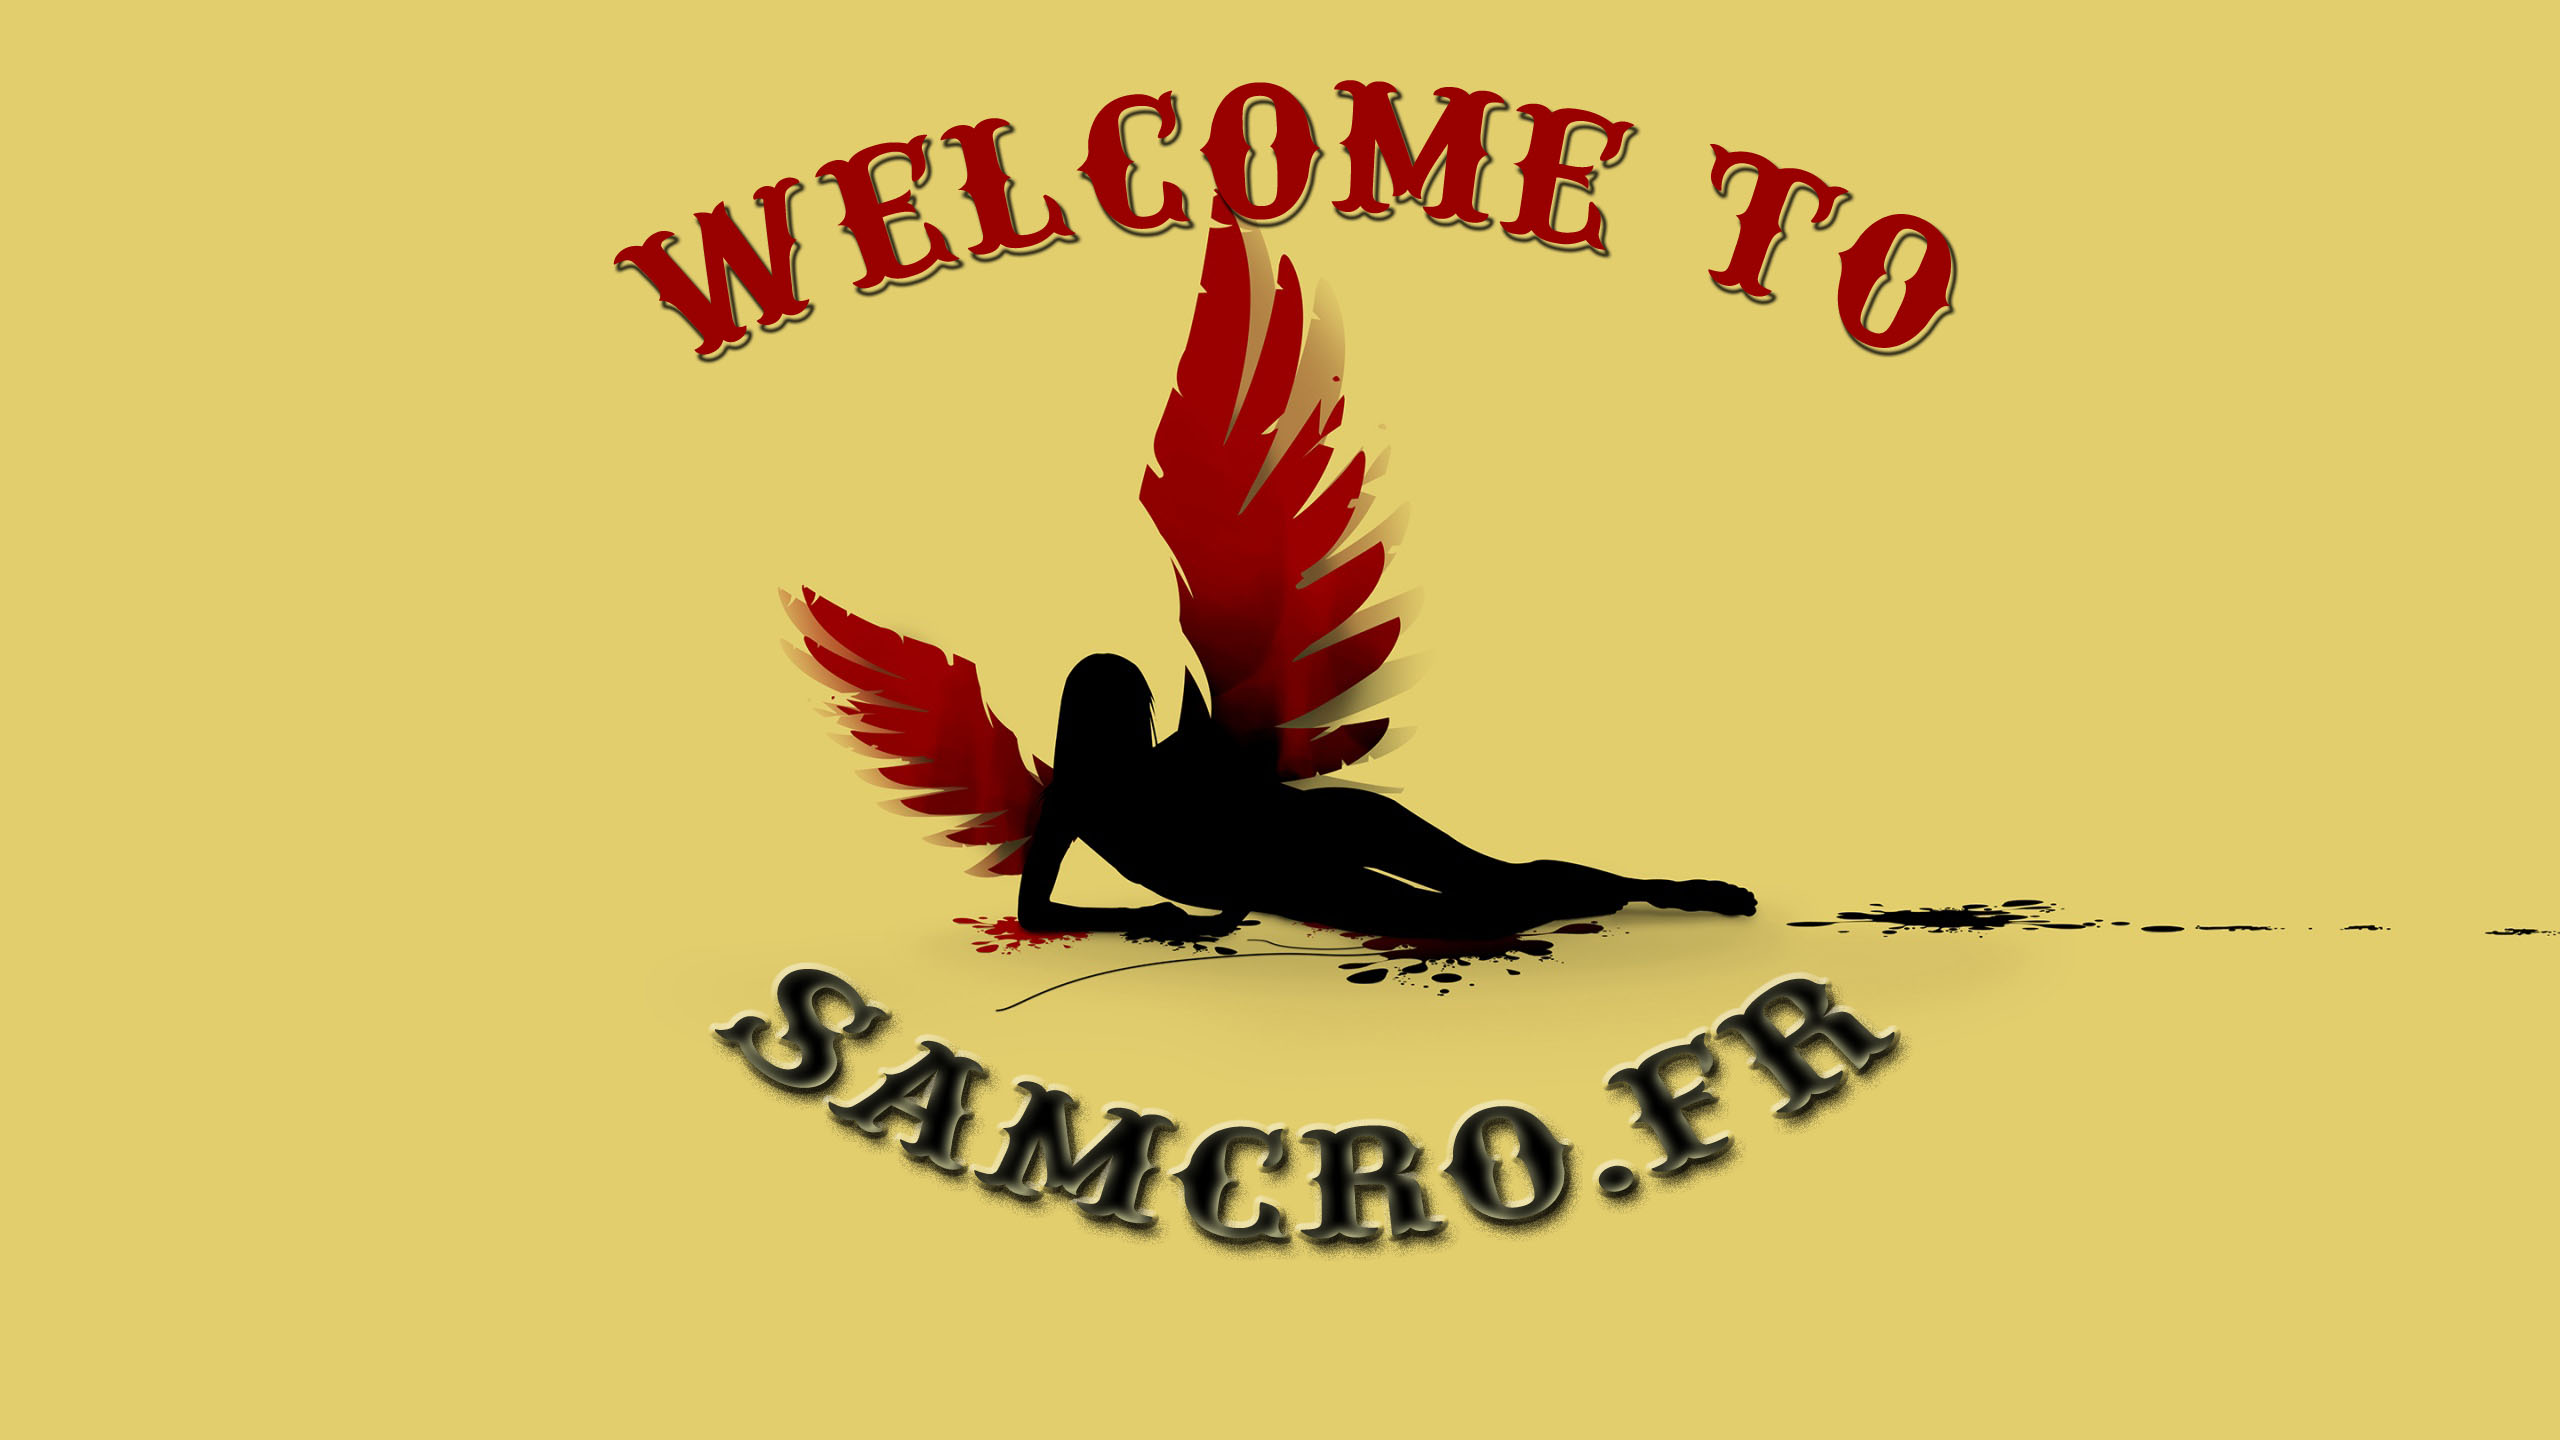 WELCOME TO SAMCRO.FR WWW.SAMCRO.FR